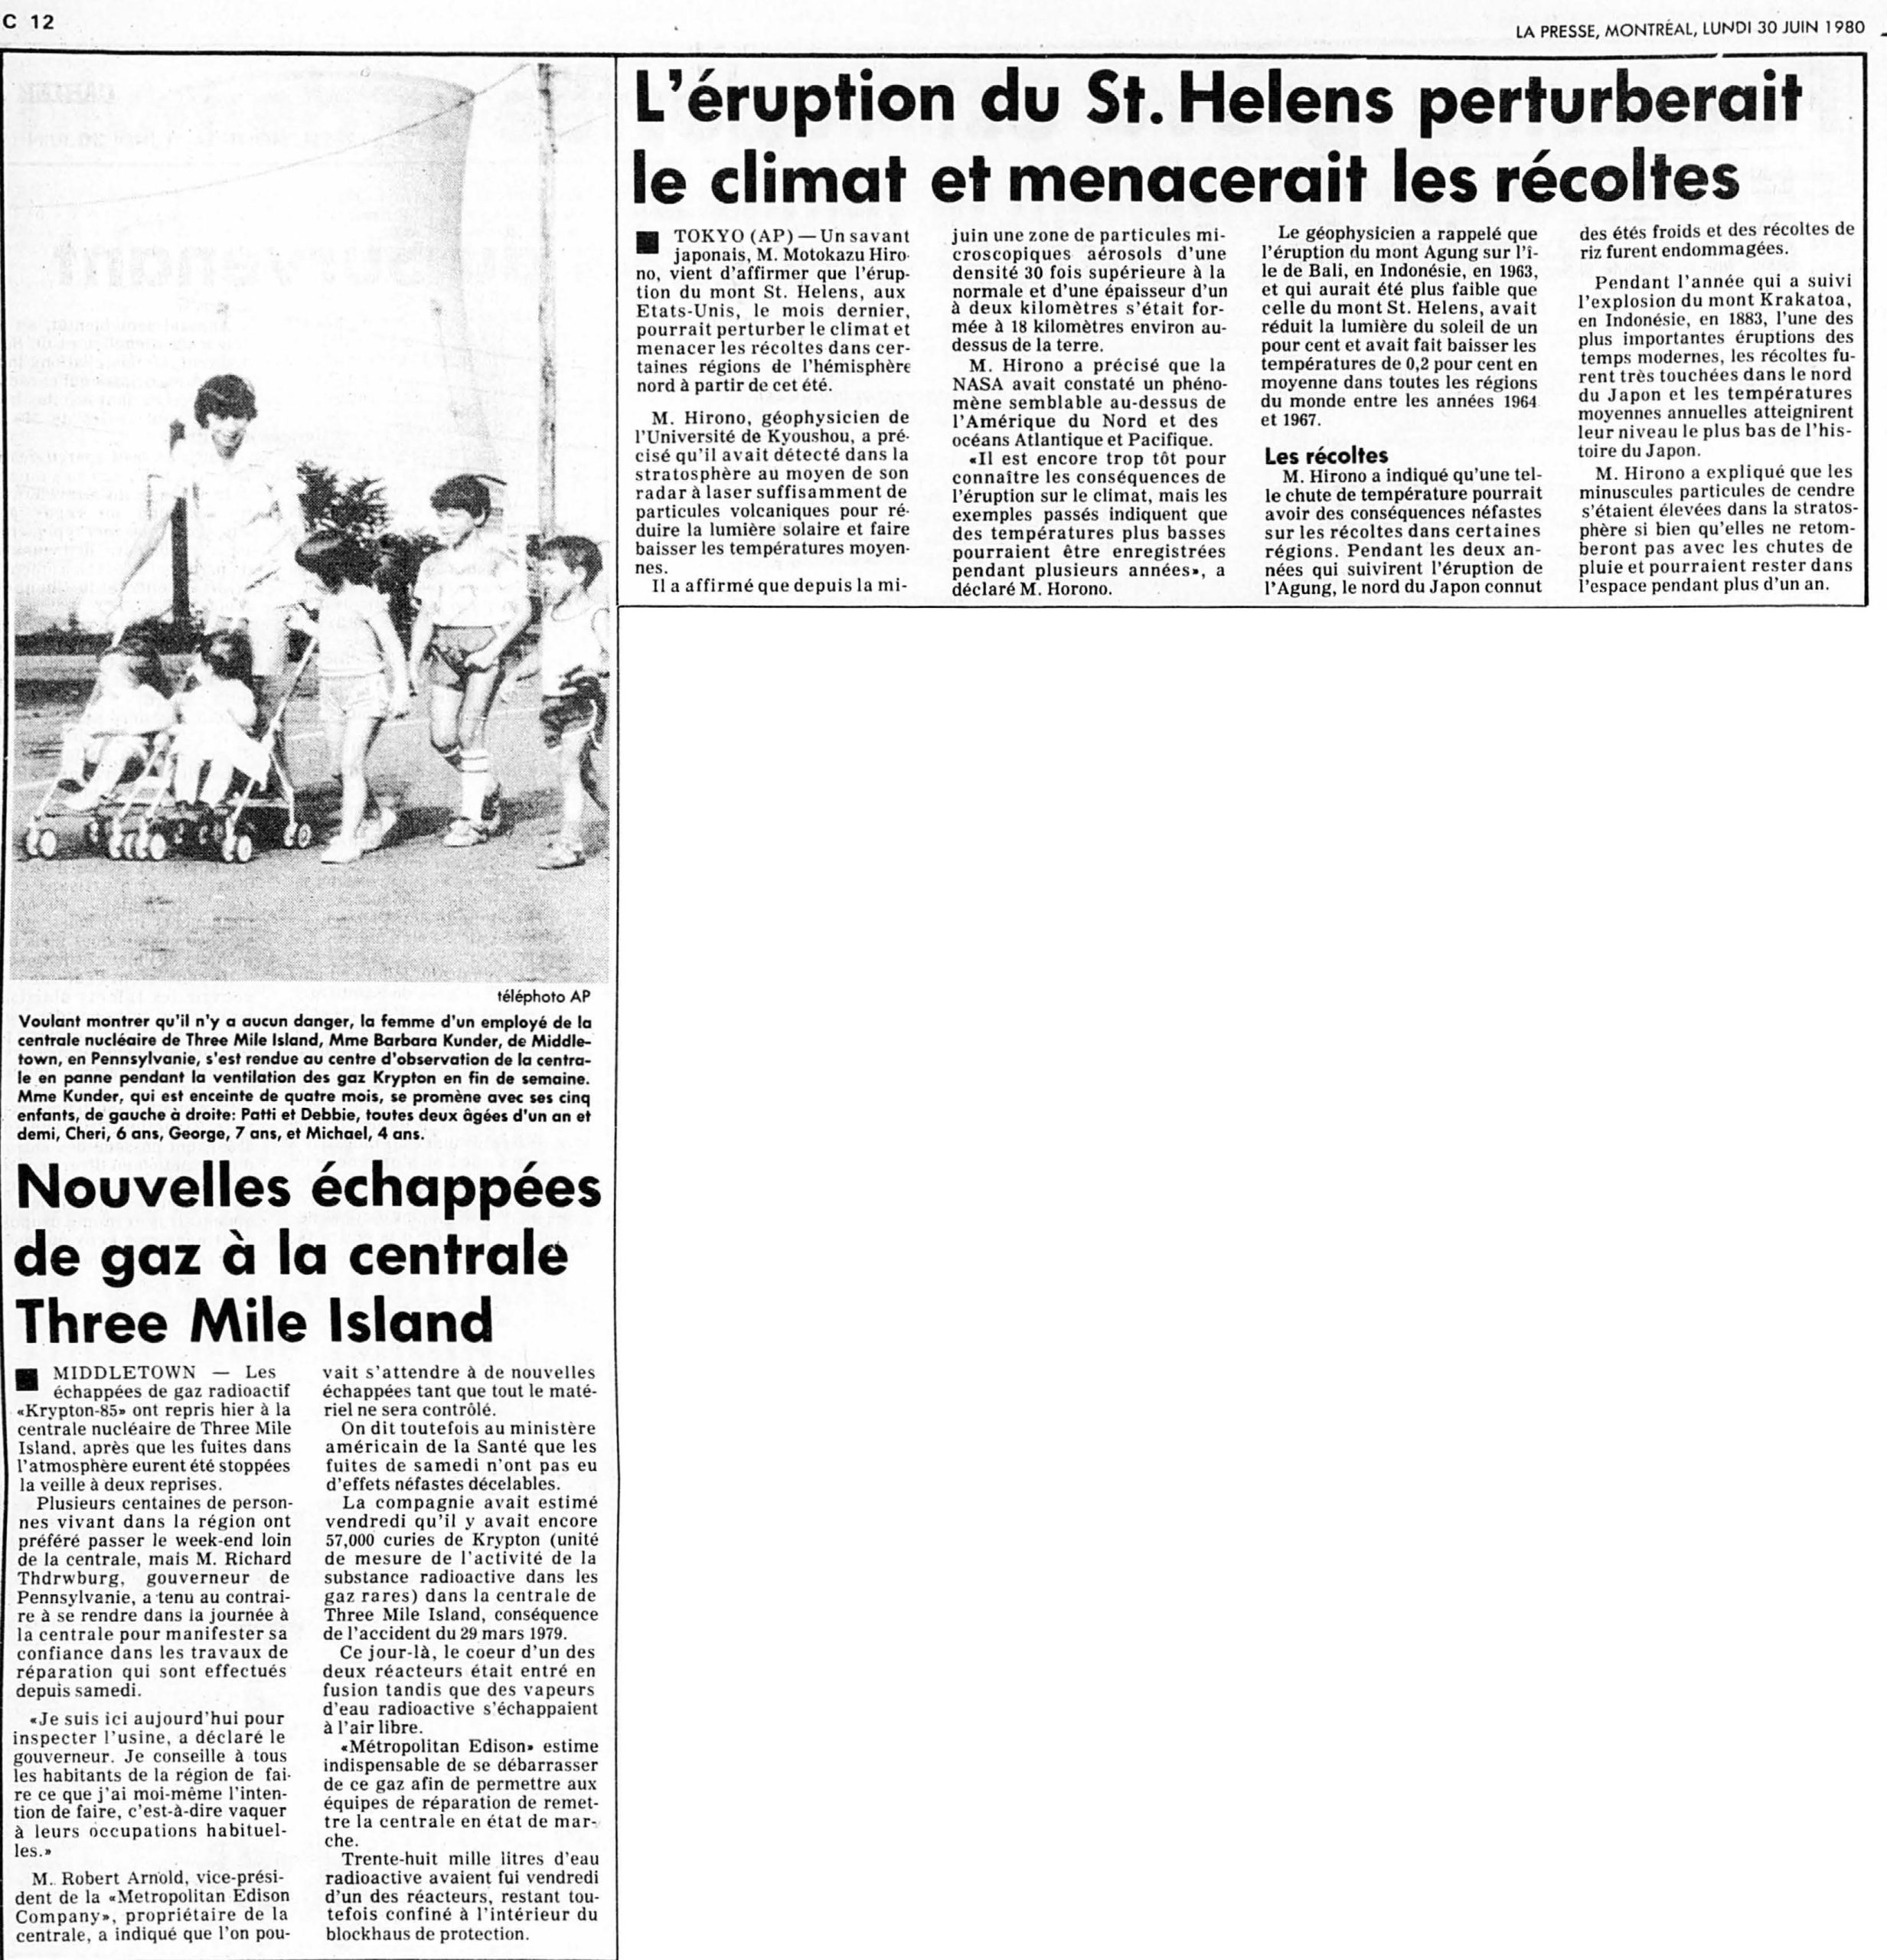 La Presse. 30 juin 1980 [Article de journal]
